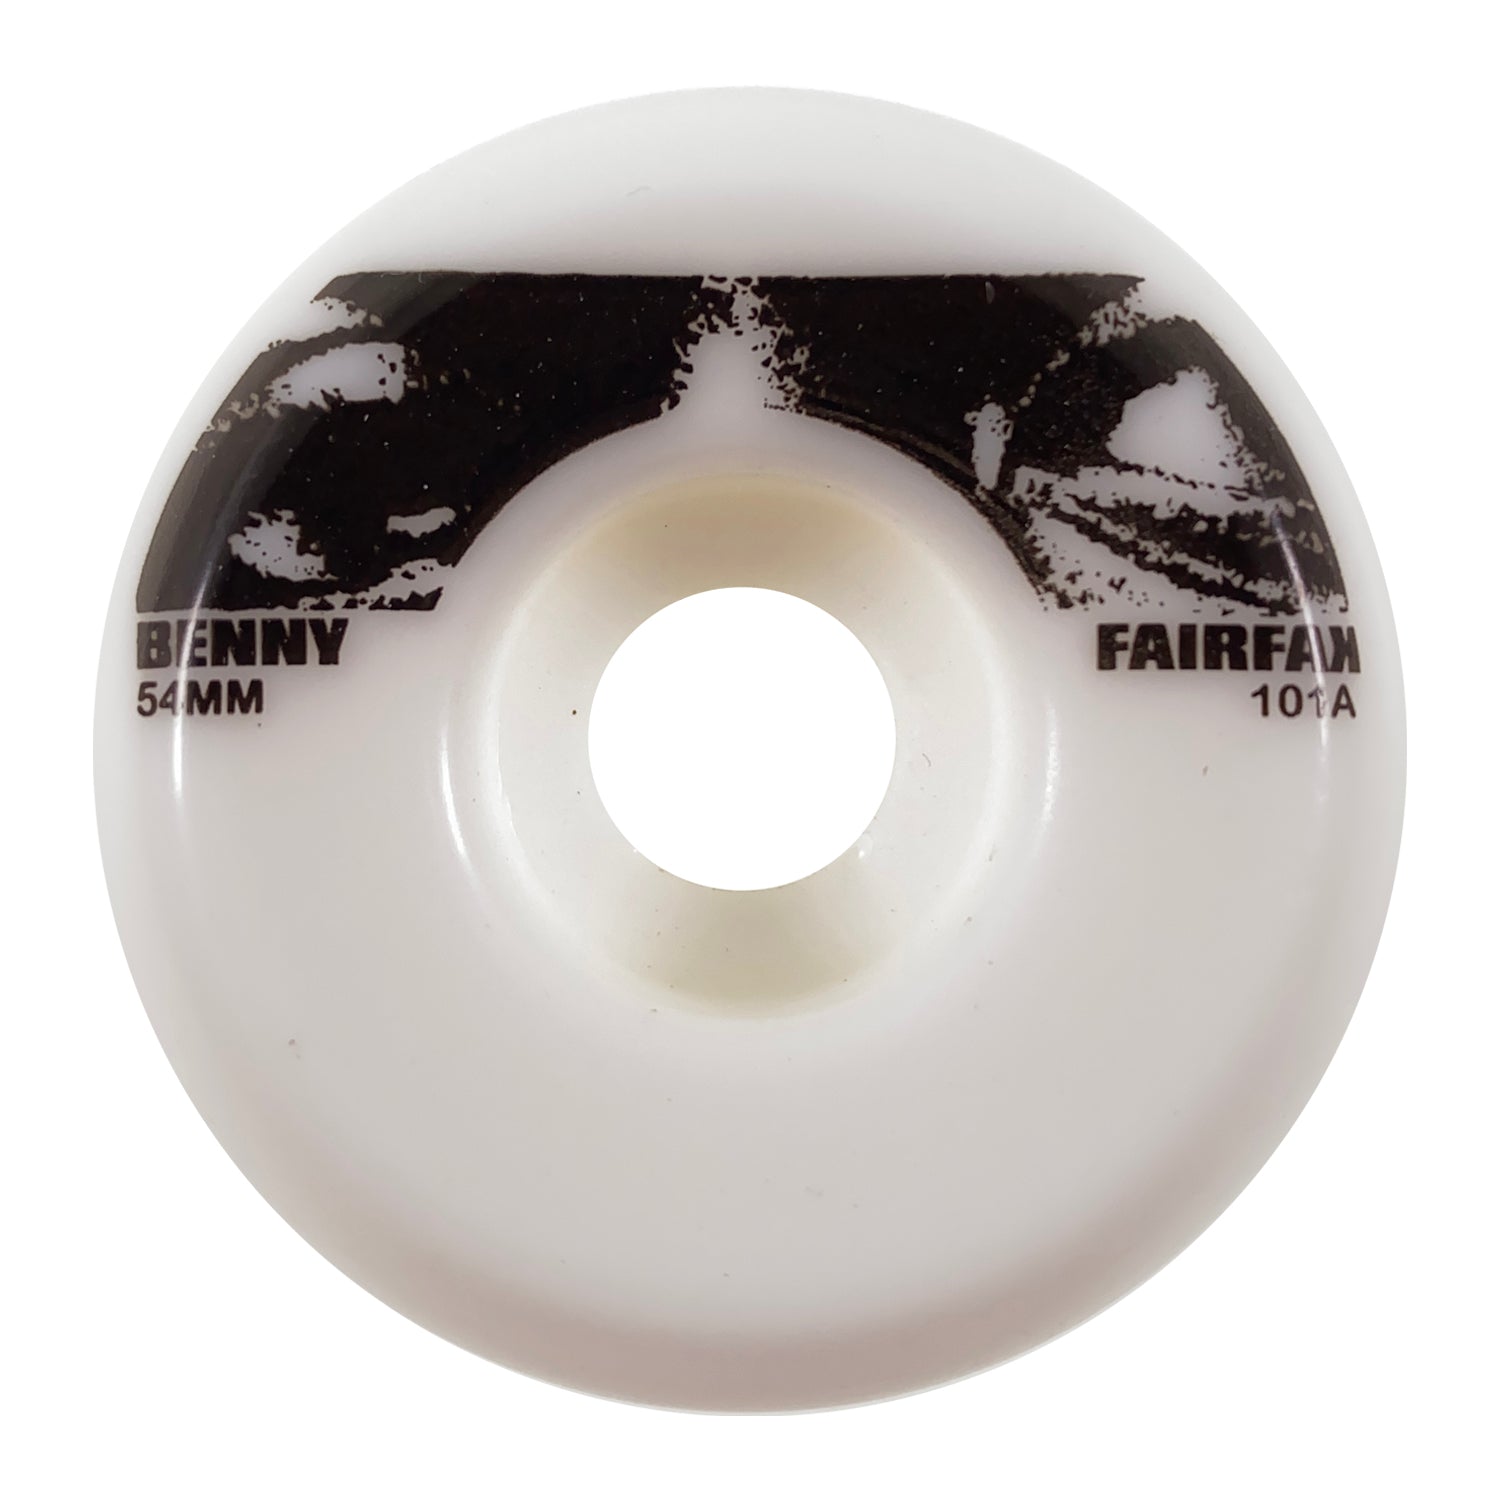 Wayward Wheels - 54mm - Funnel Pro Wheel - Benny Fairfax - Prime Delux Store